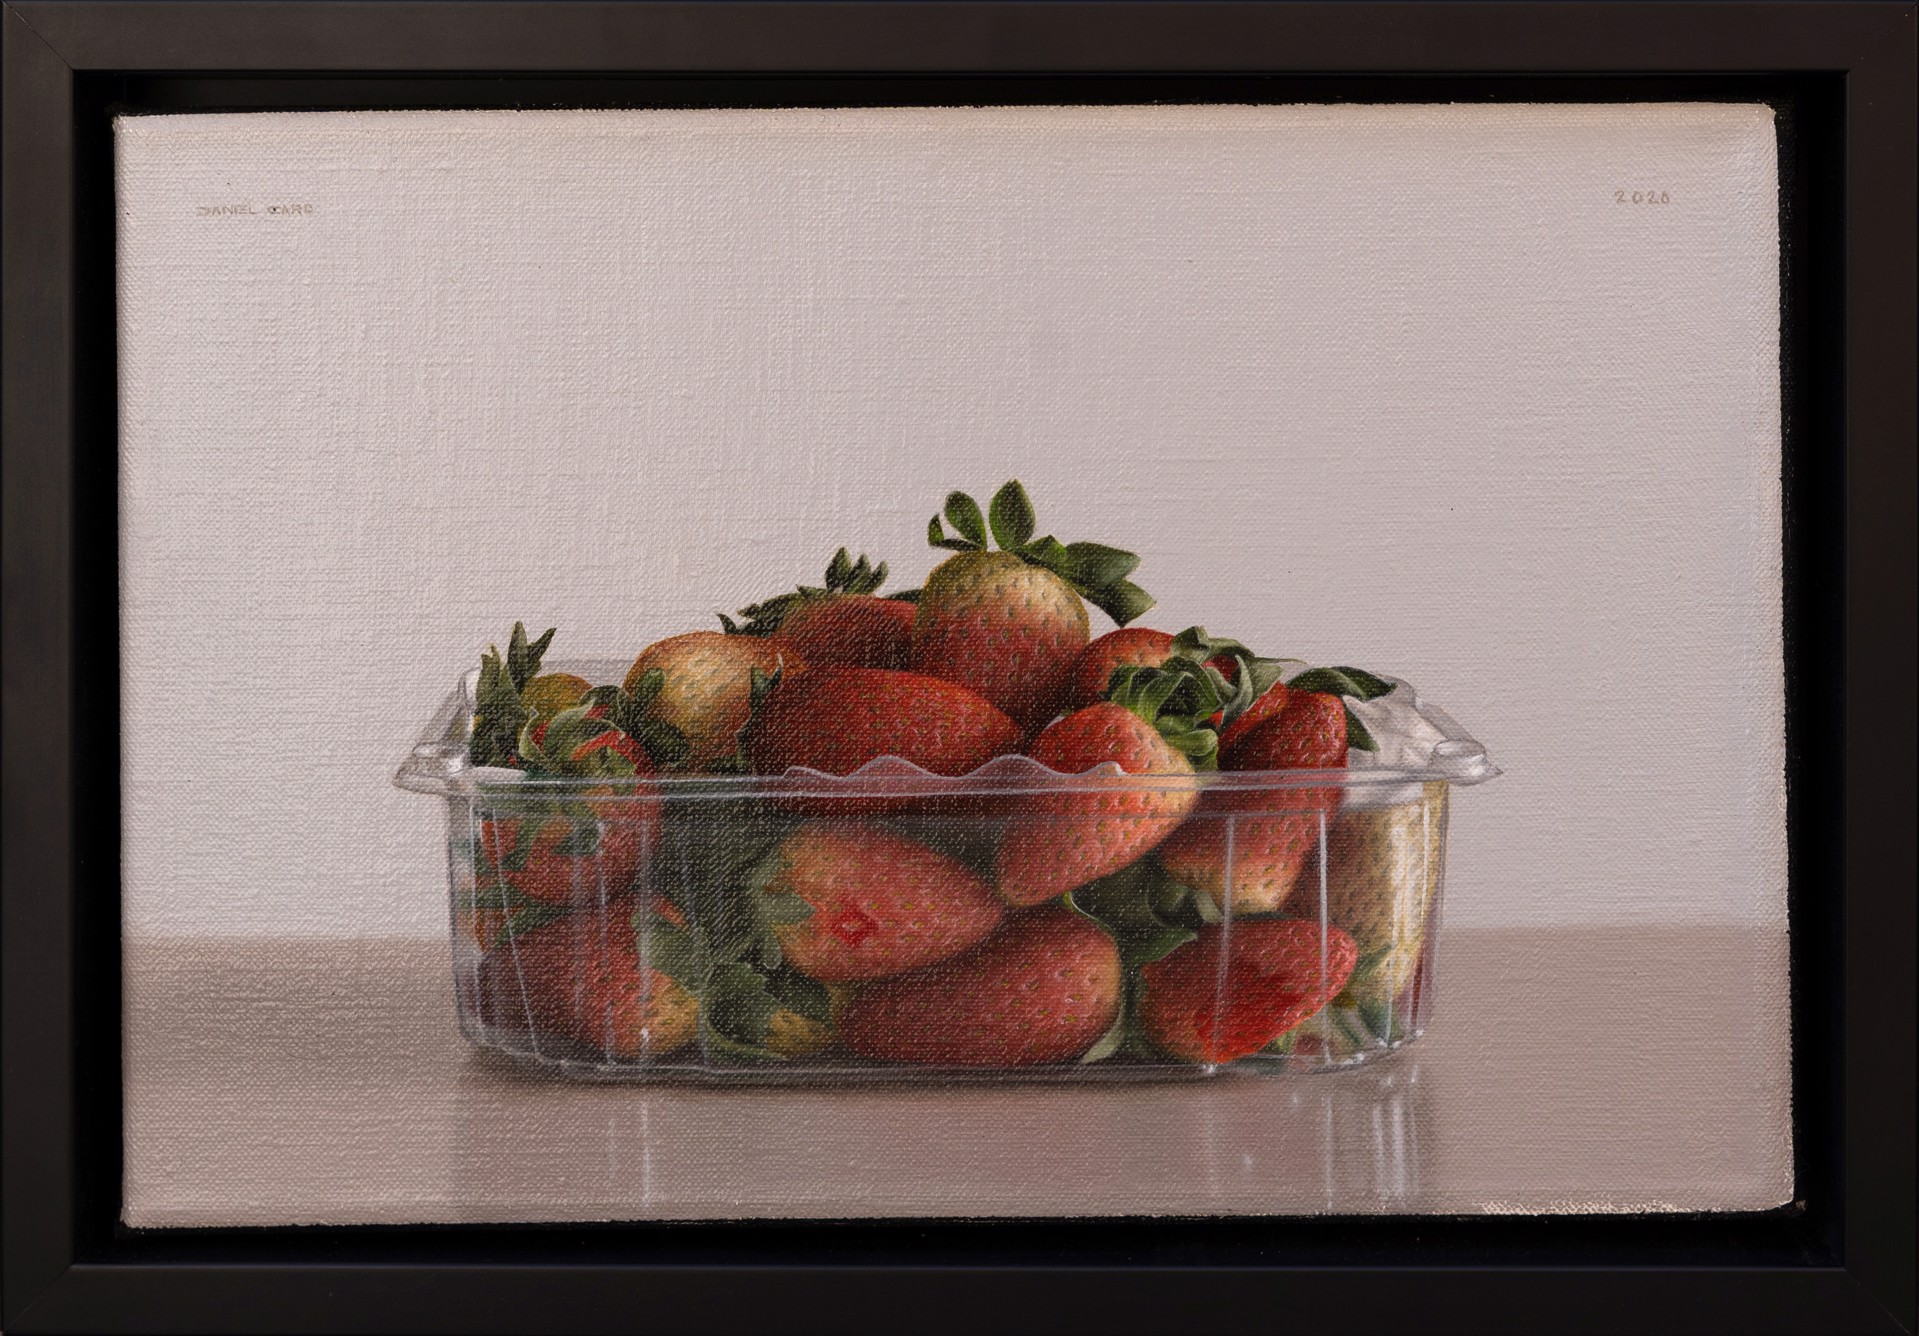 Strawberries by Daniel Caro